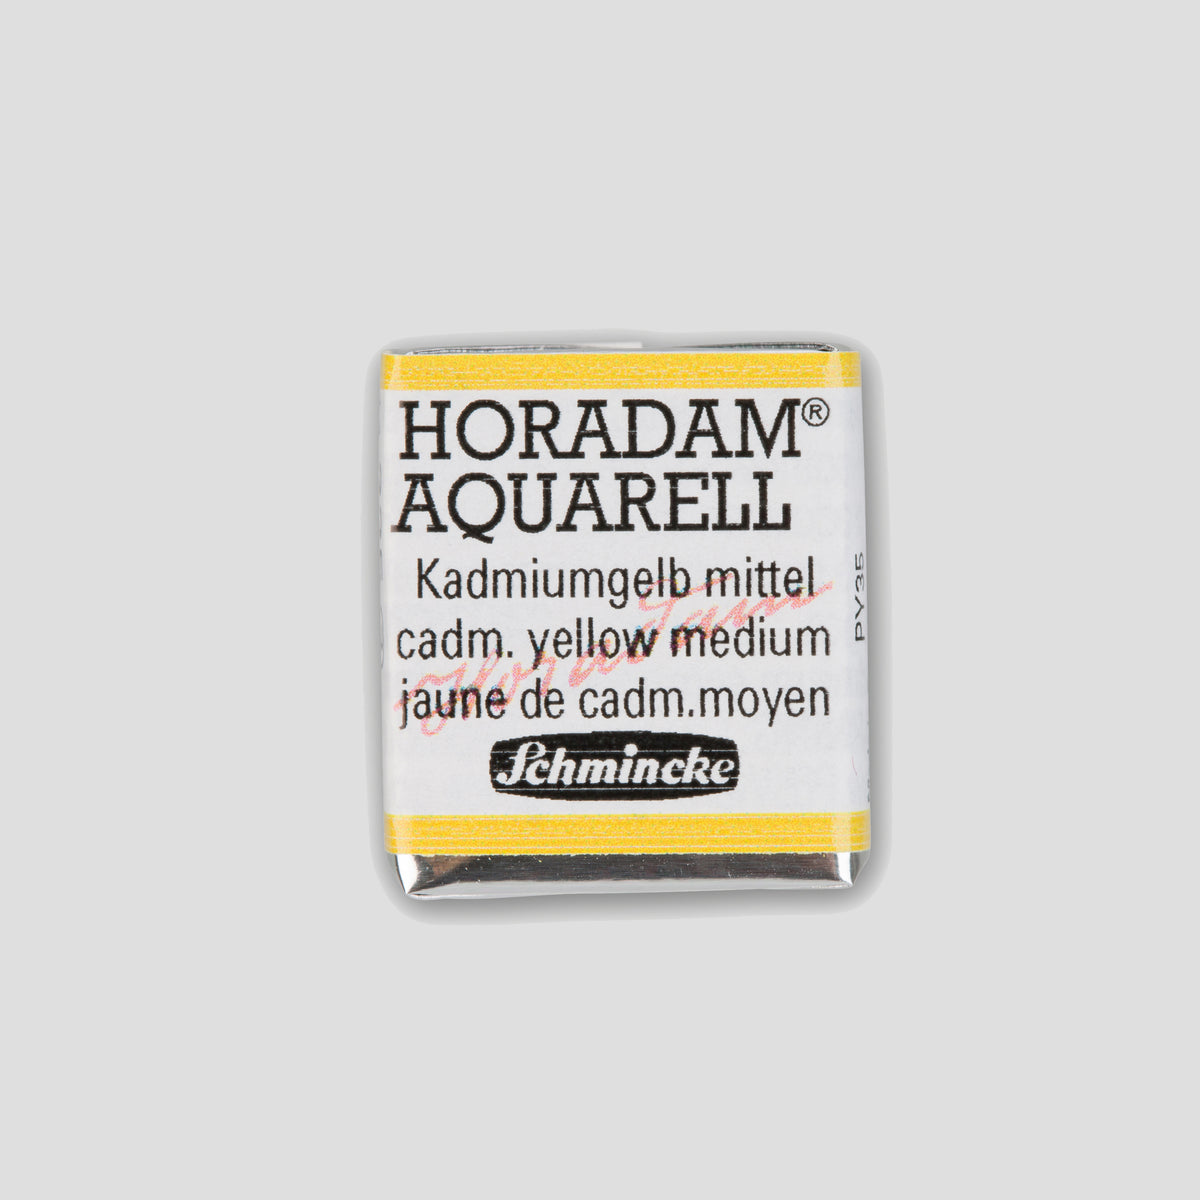 Schmincke Horadam® Halbpfanne cadmiumgelb mittel